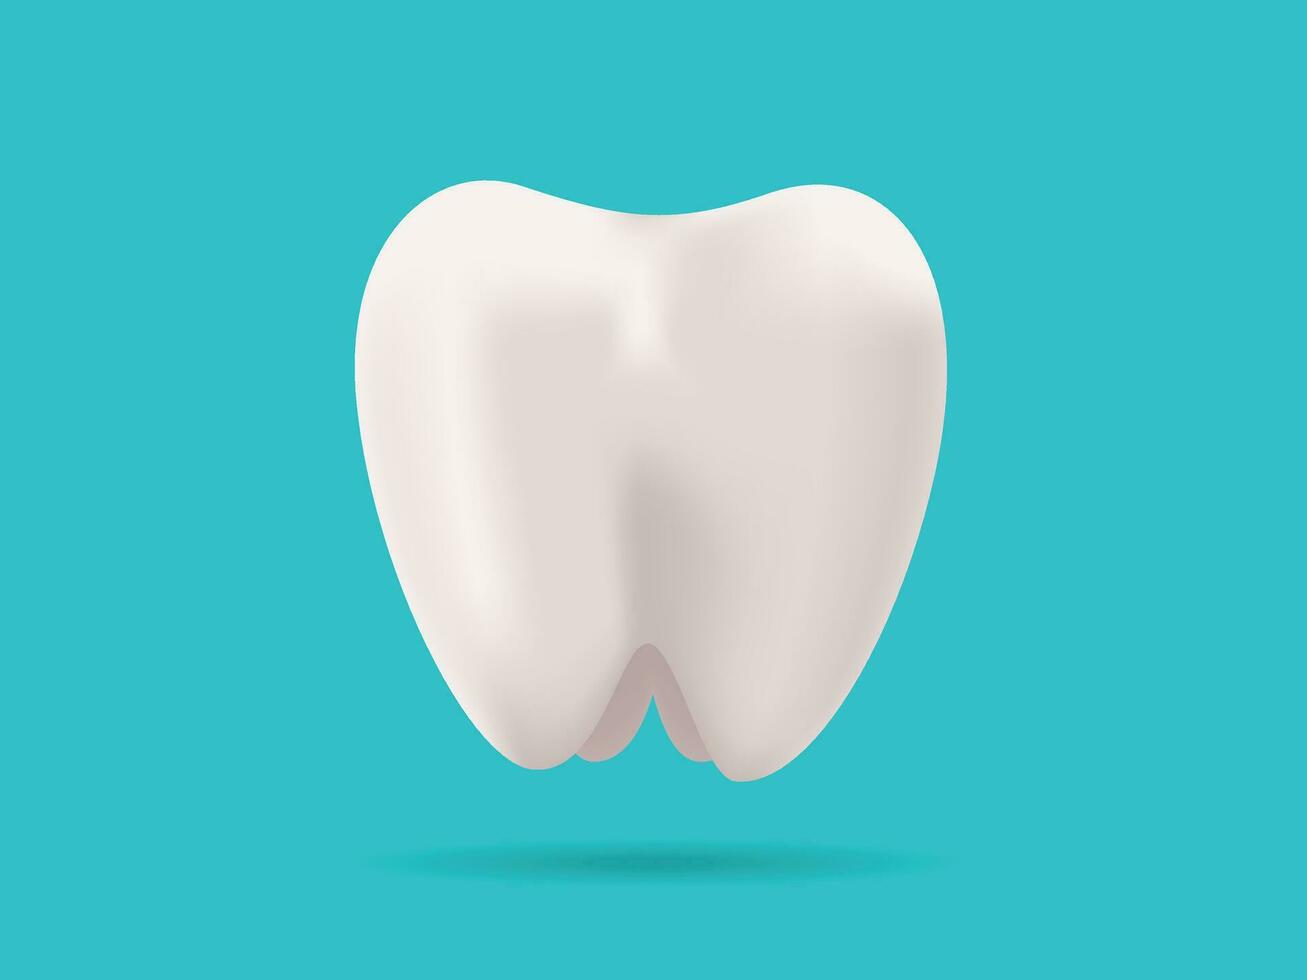 3D Realistic Dental Floss Vector Illustration. Oral Health Care Concept